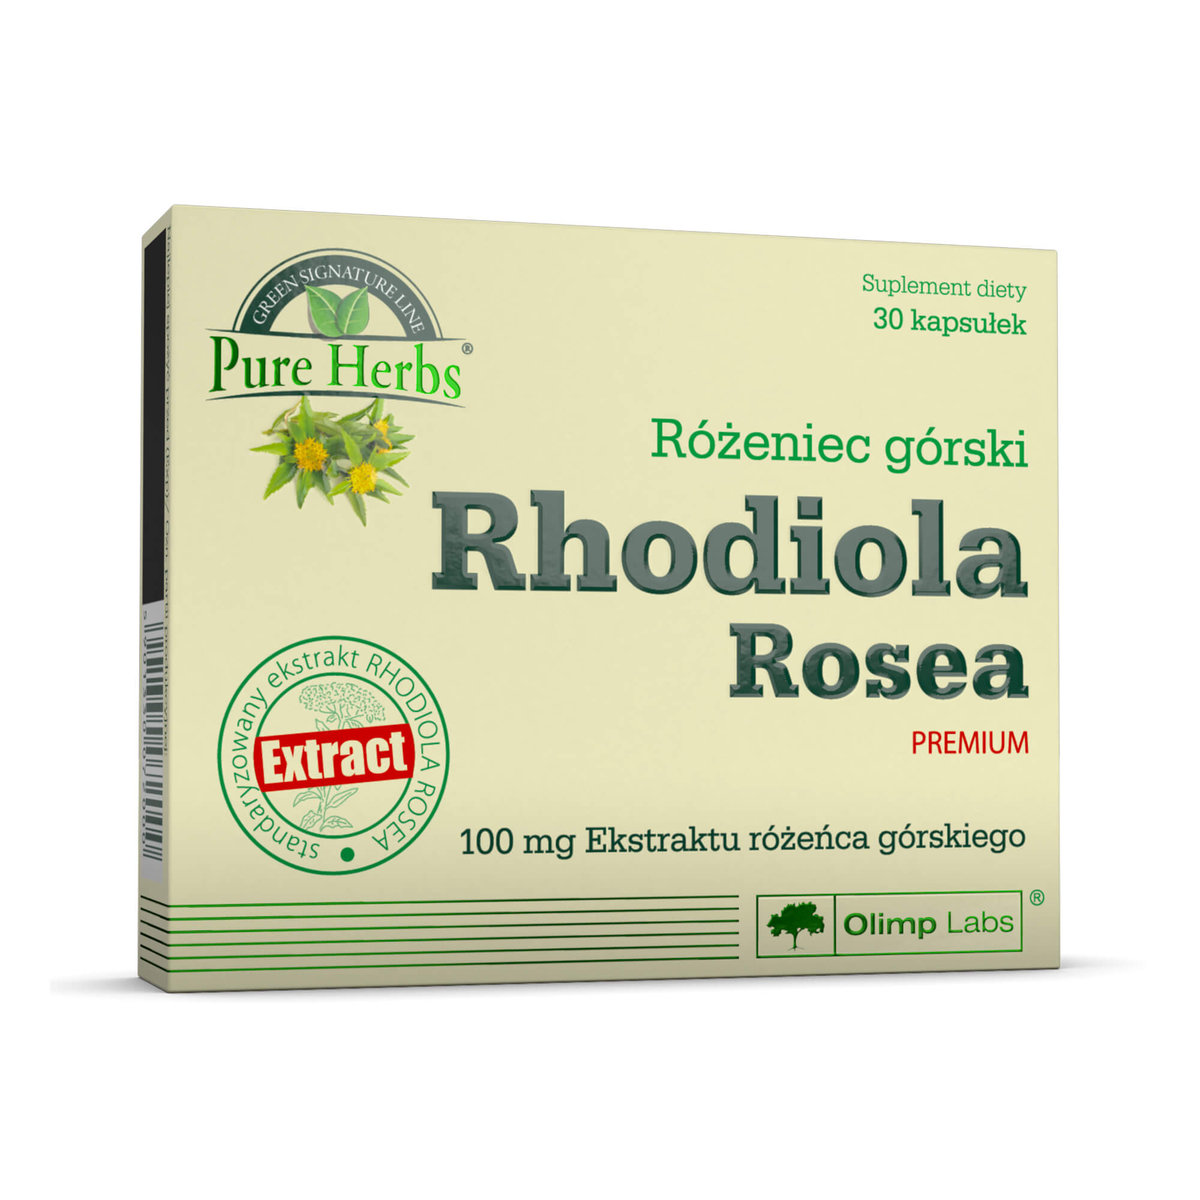 Rhodiola Rosea Premium, suplement diety, 30 kapsułek  3582461